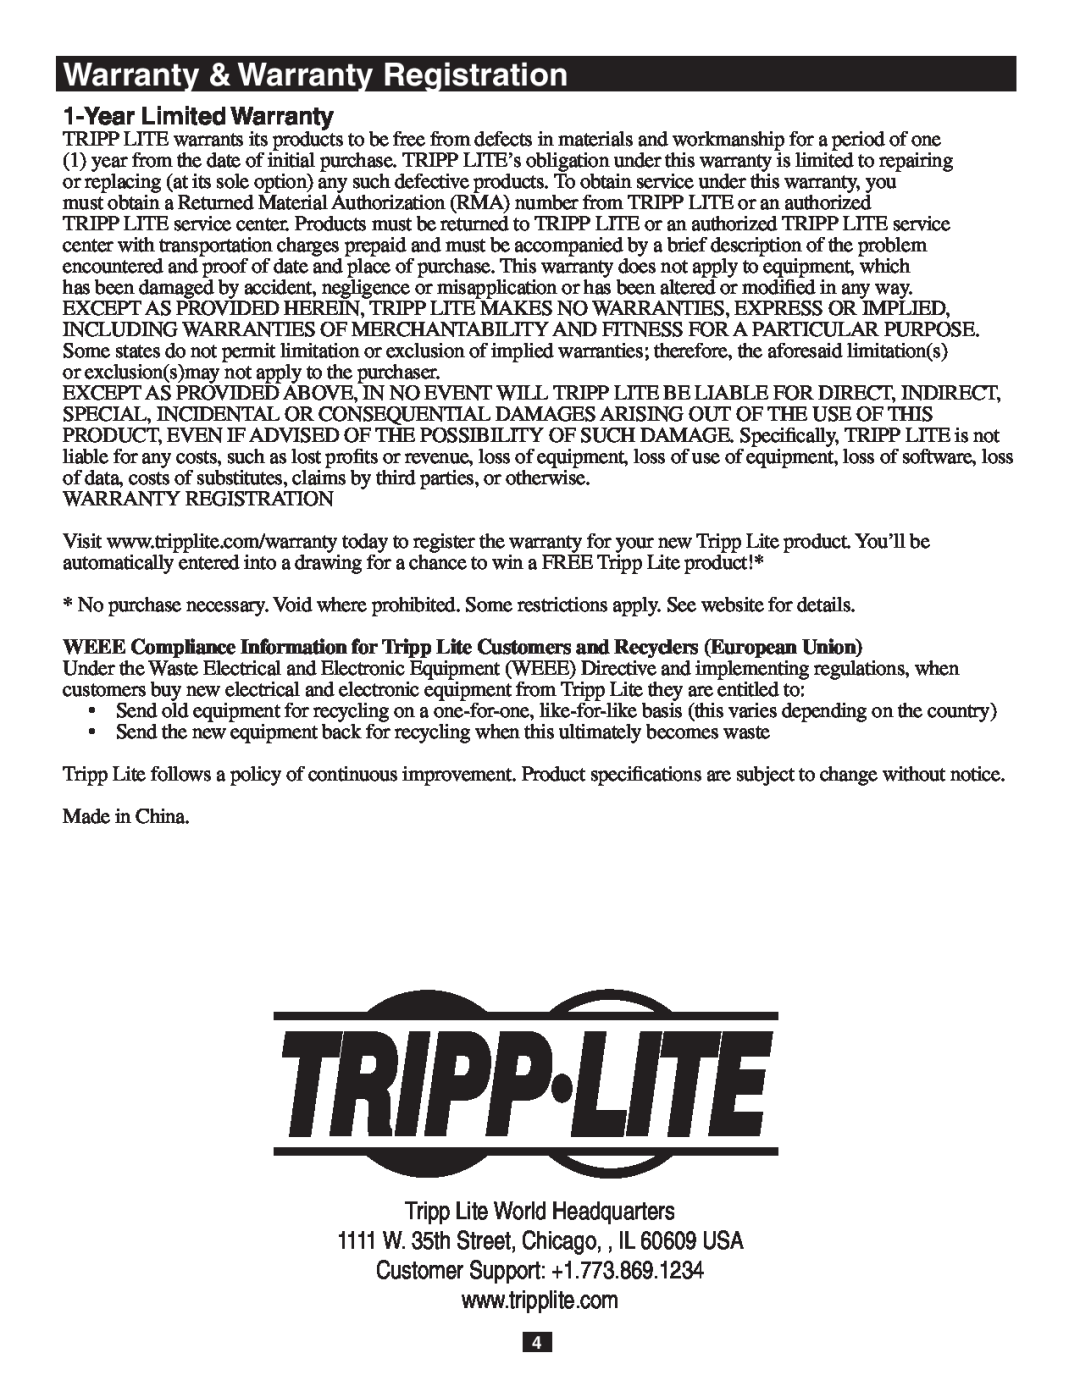 Tripp Lite B119-302-R owner manual Year Limited Warranty, Warranty & Warranty Registration, Tripp Lite World Headquarters 